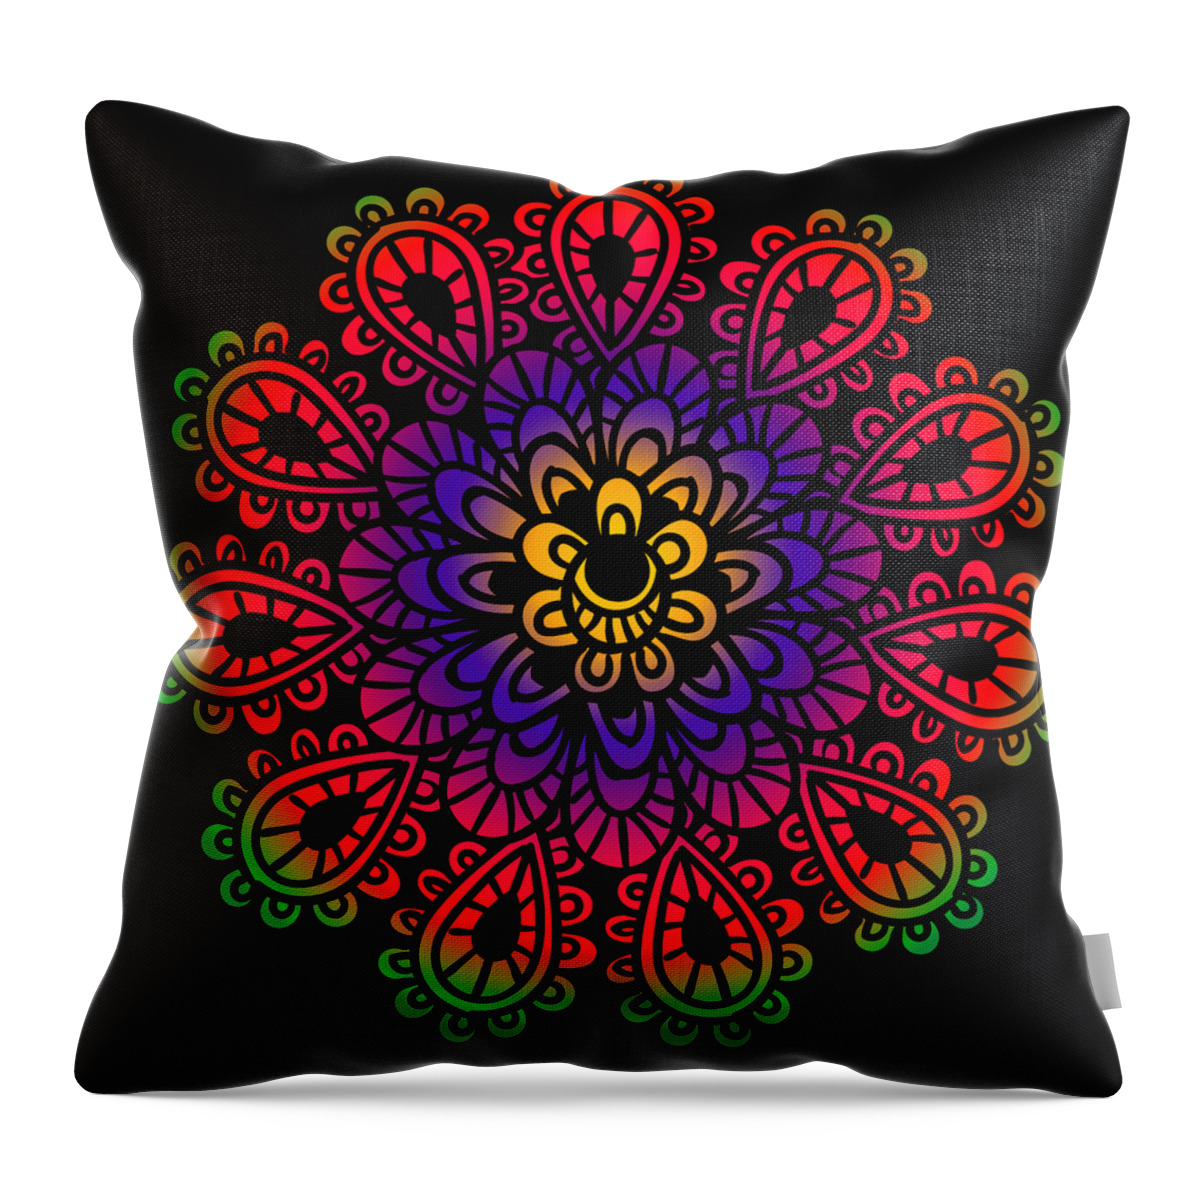 Georgiana Romanovna Throw Pillow featuring the digital art Mandala By Lamplight by Georgiana Romanovna